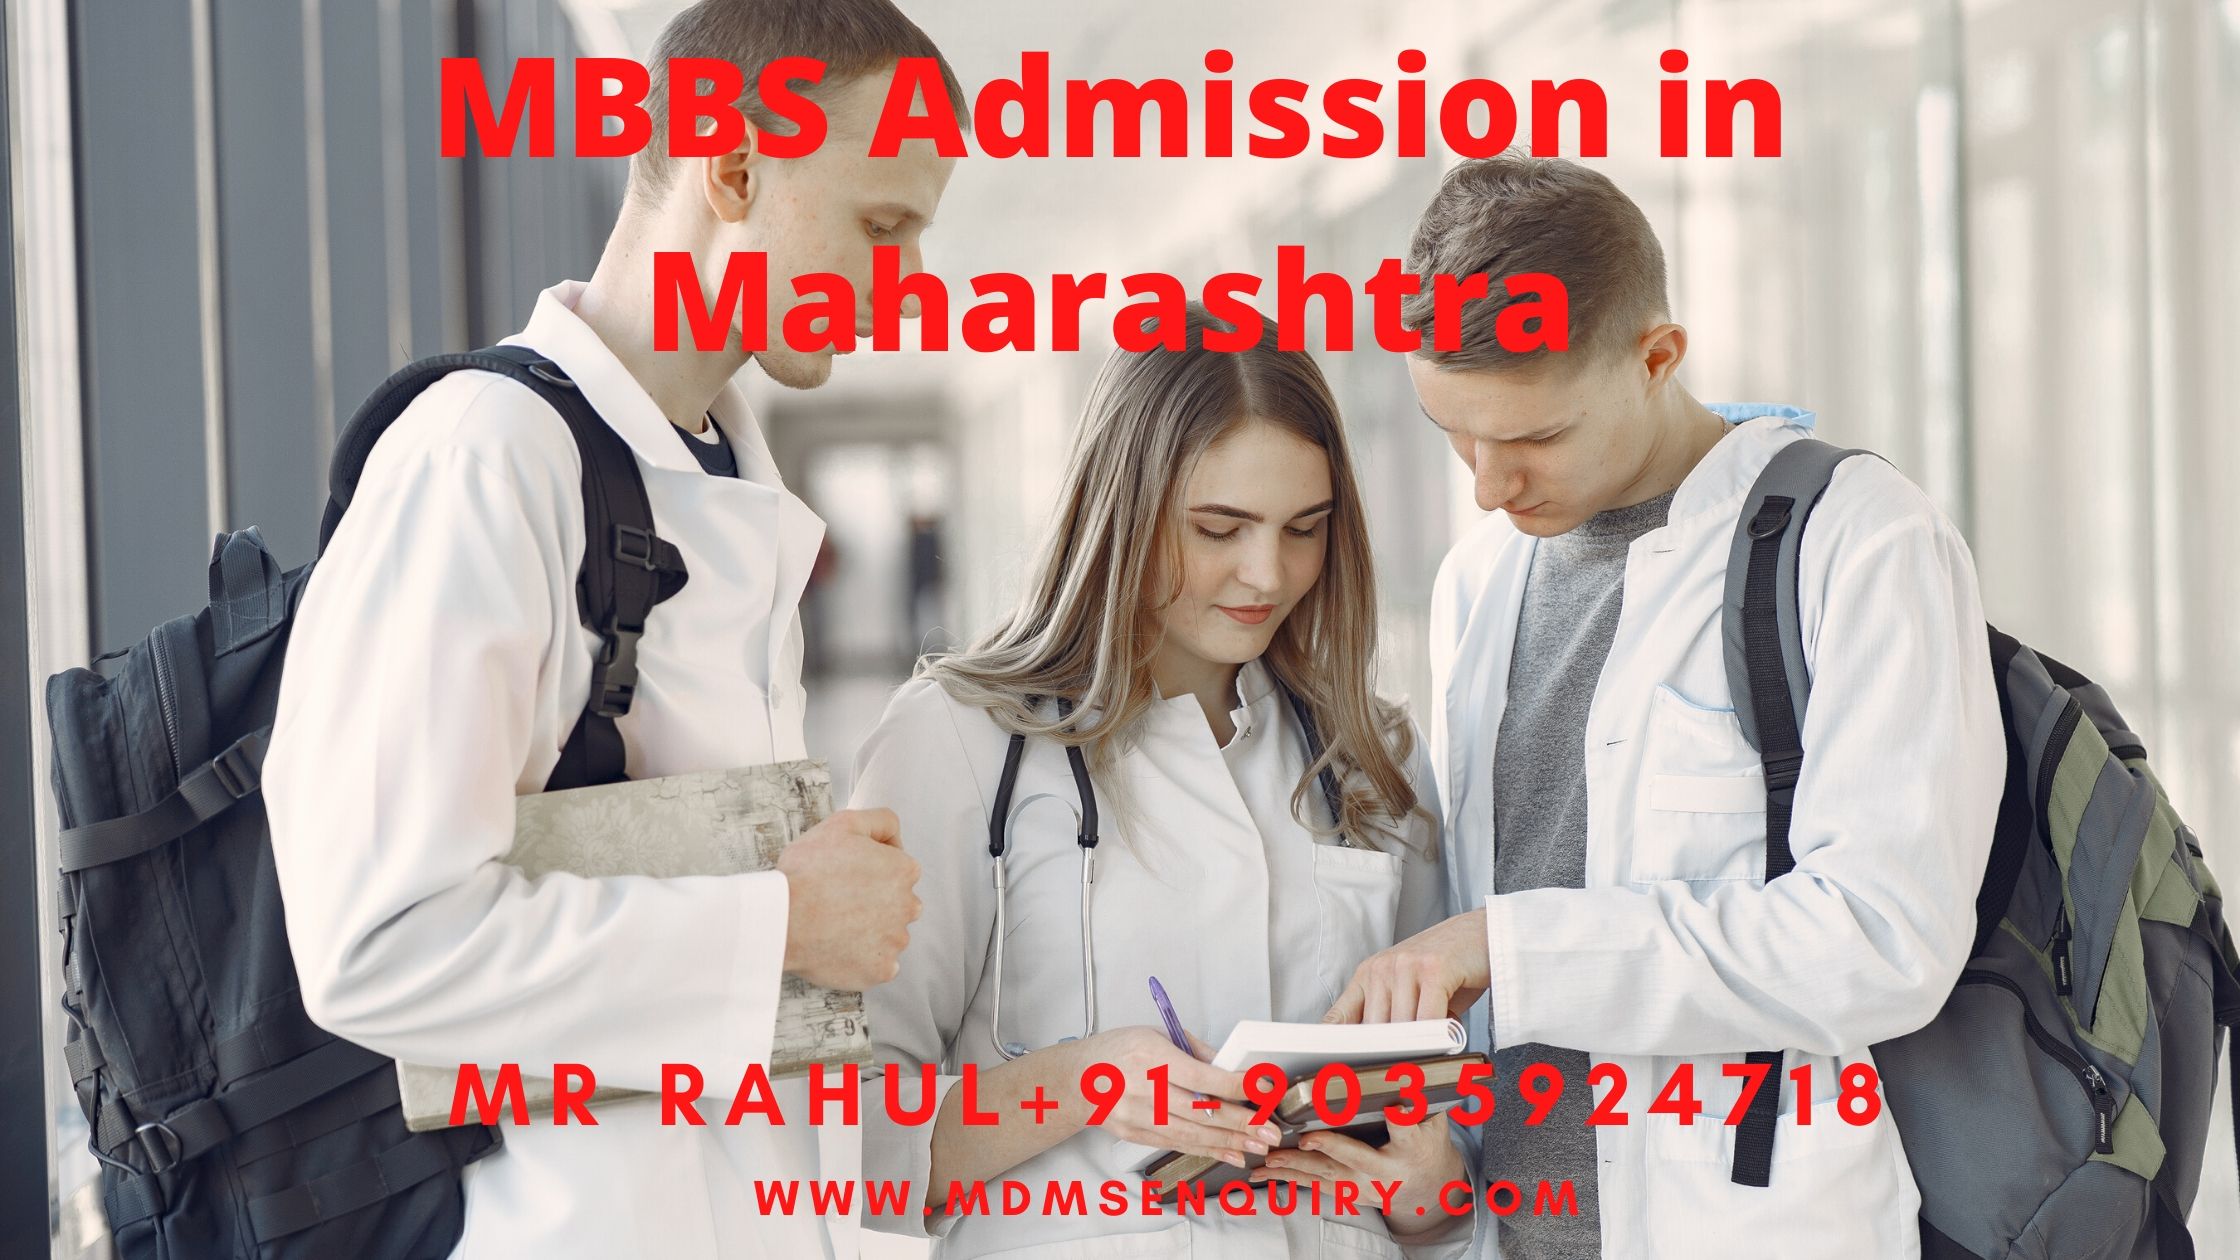 MBBS Admission in Maharashtra